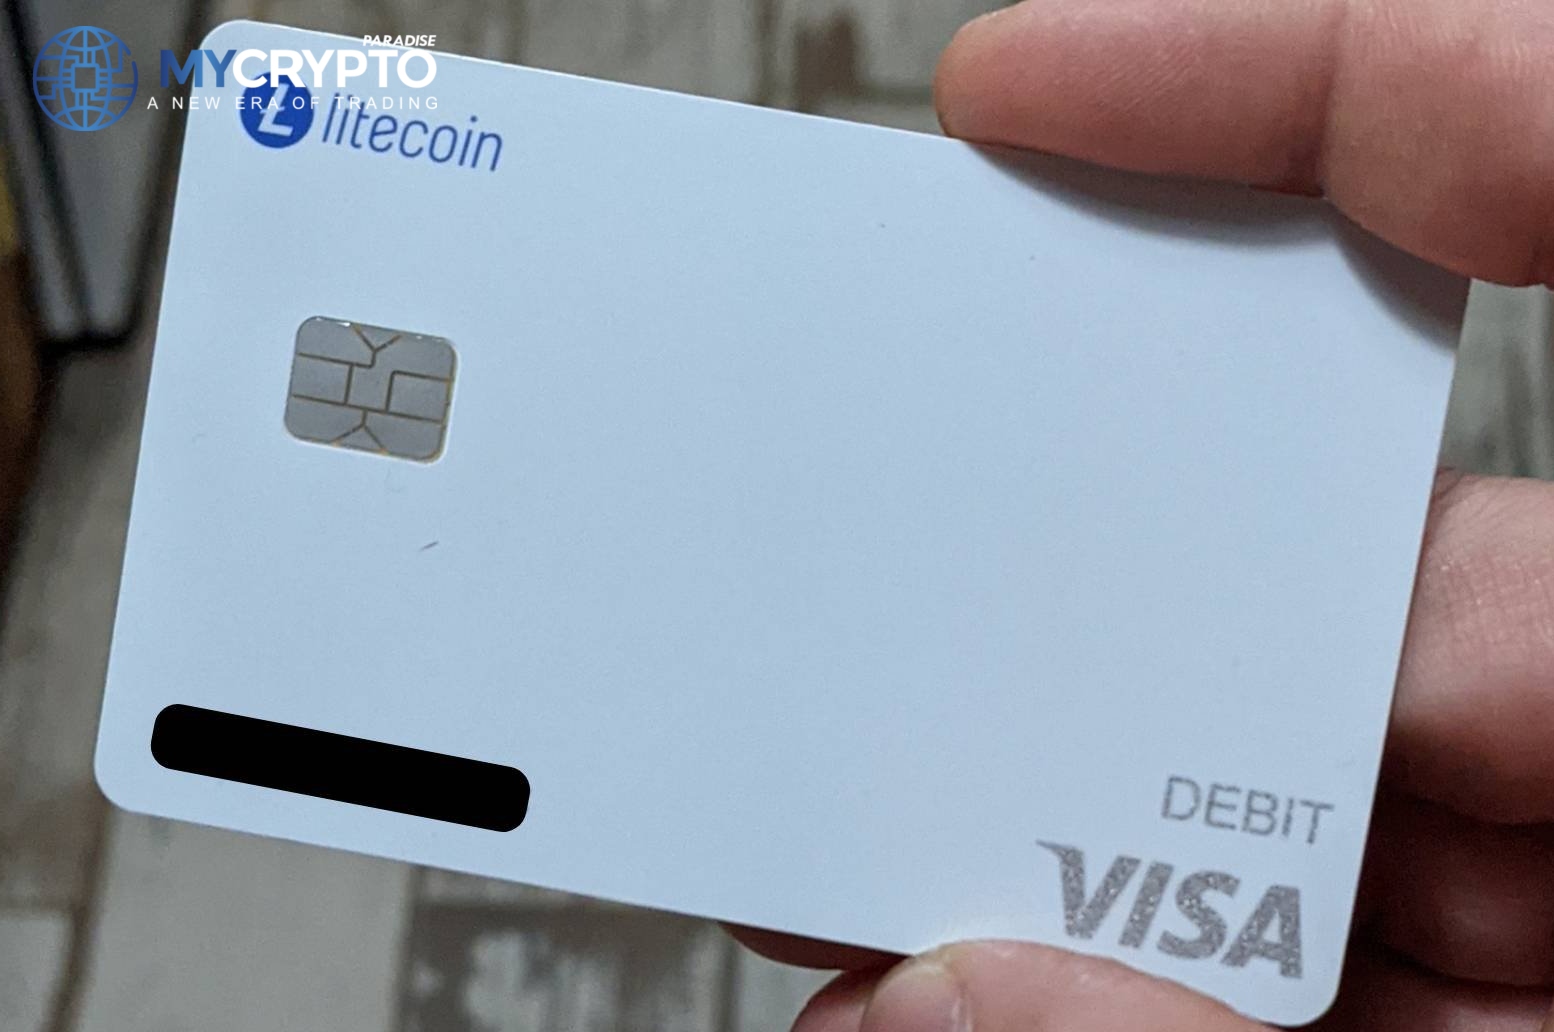 Litecoin Visa debit card